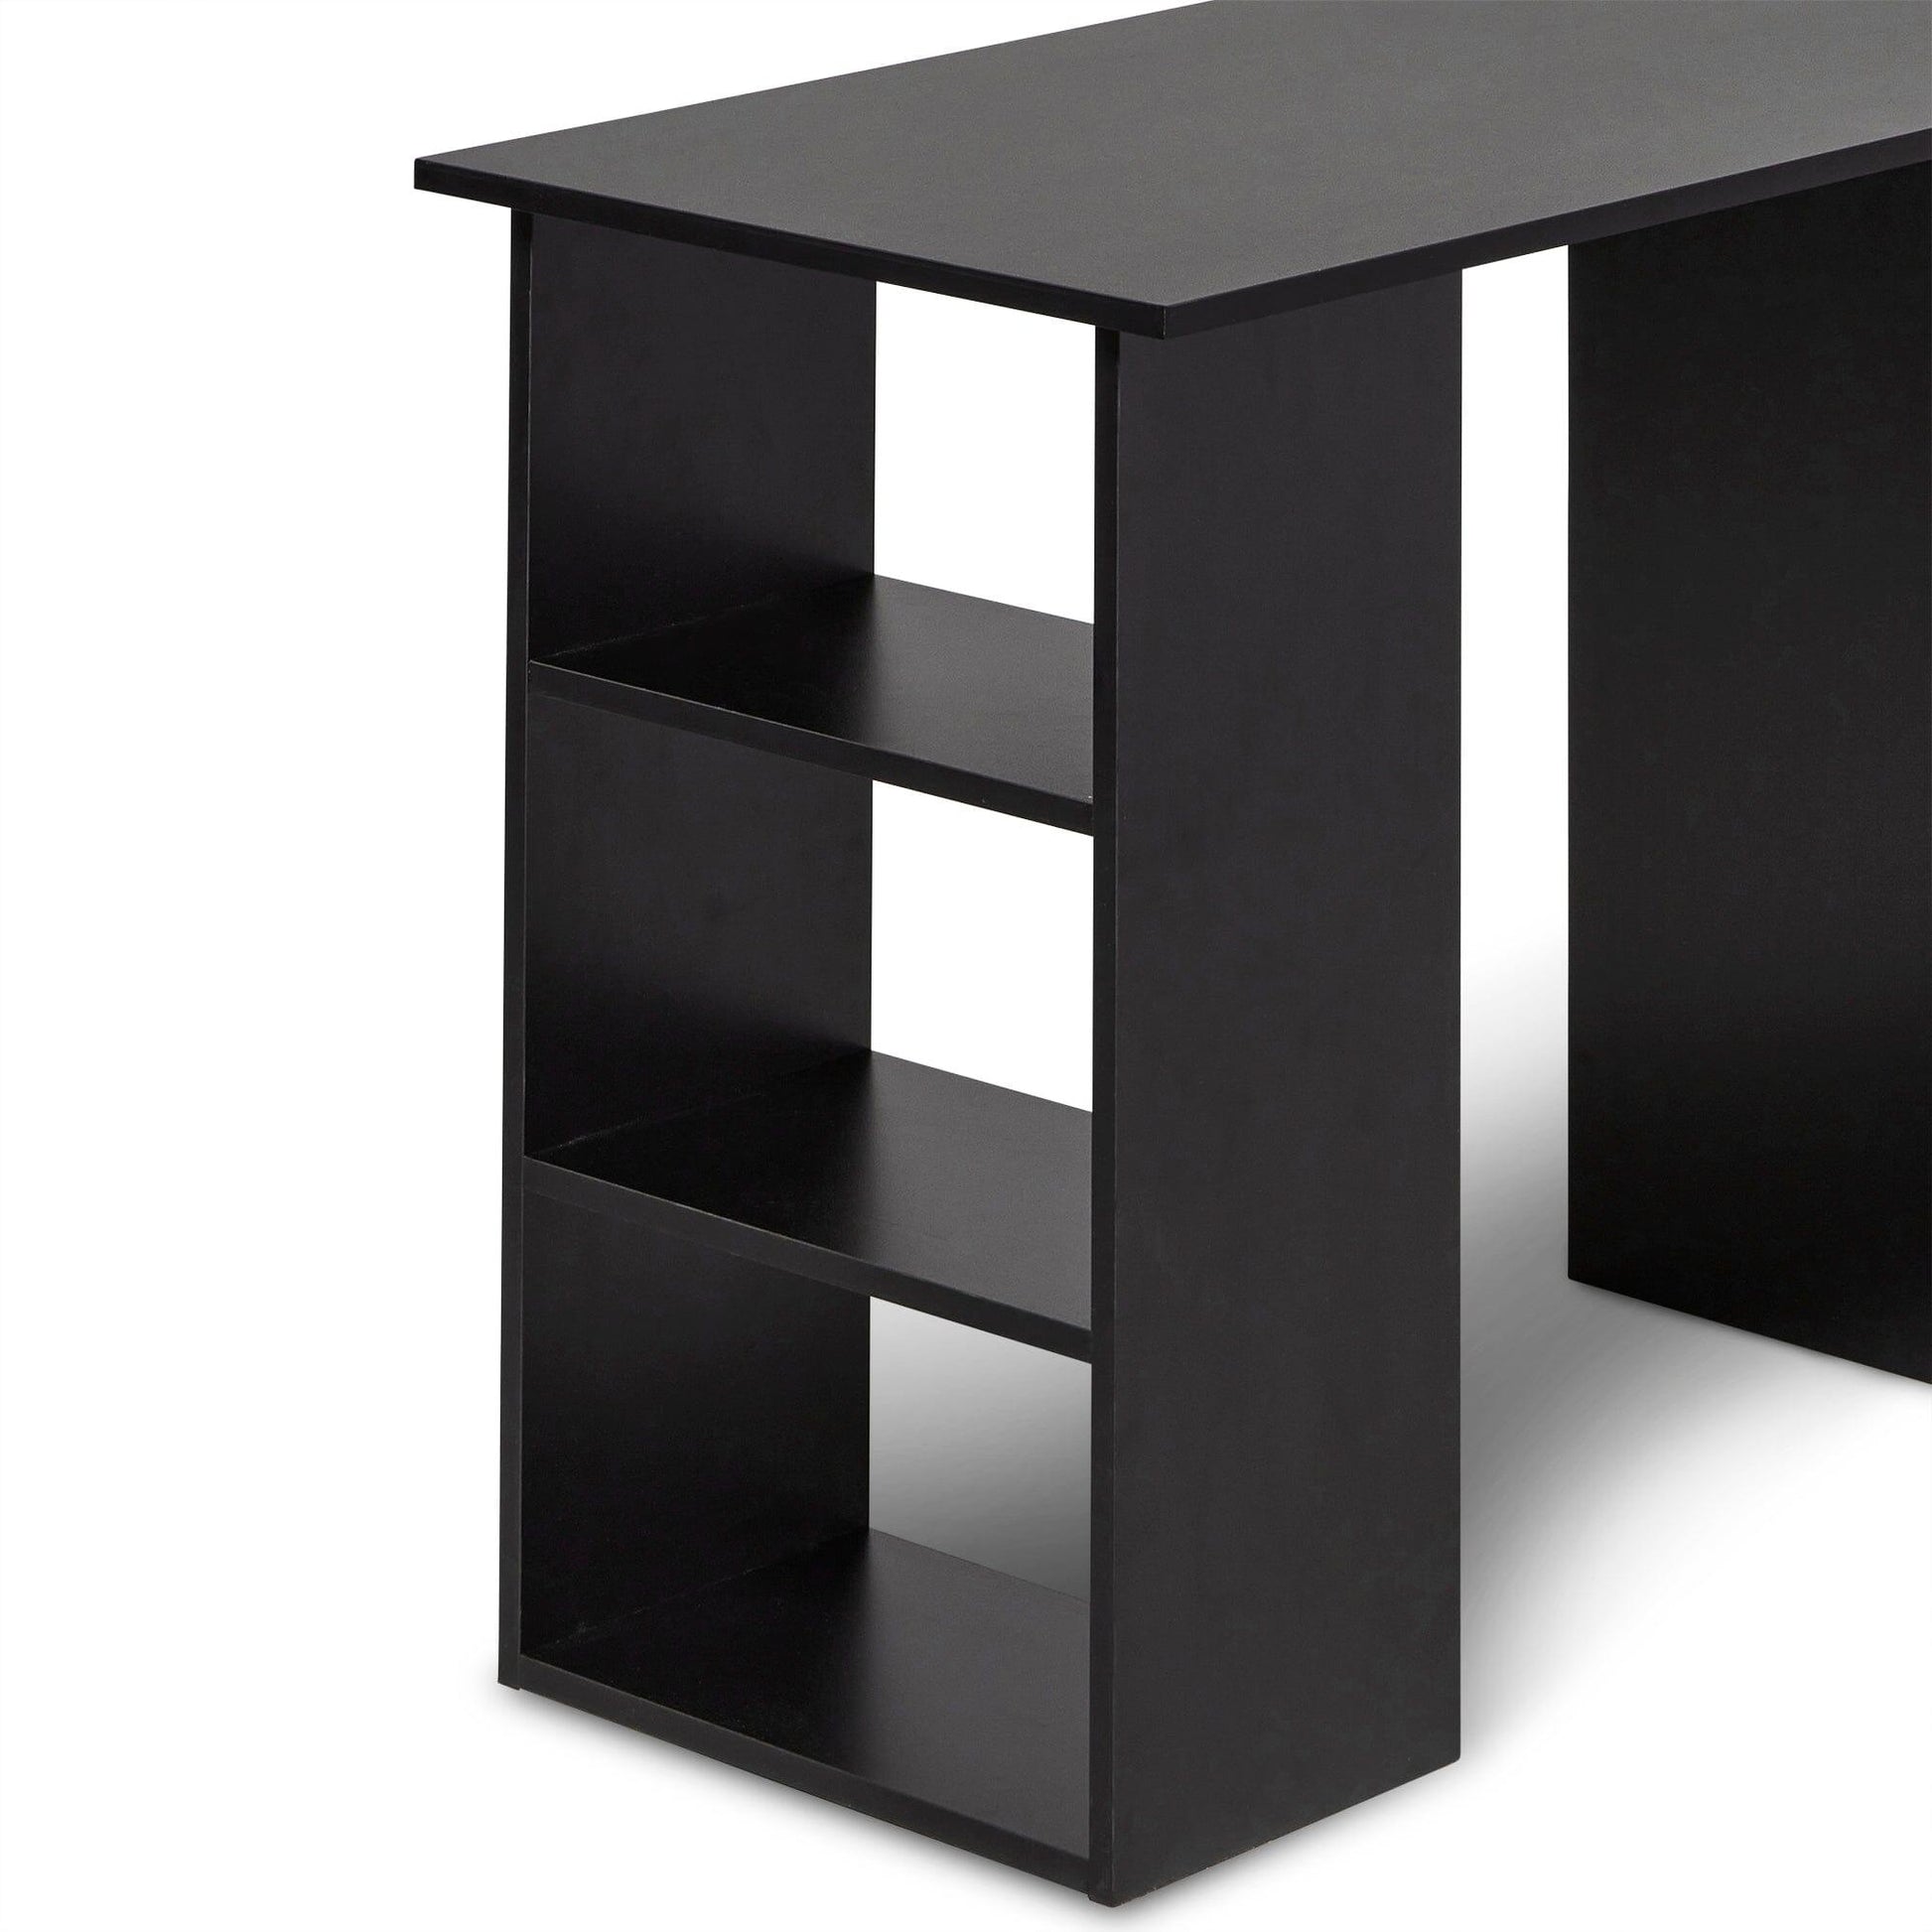 Essie Black Desk with Shelves & 3 Drawers - Laura James